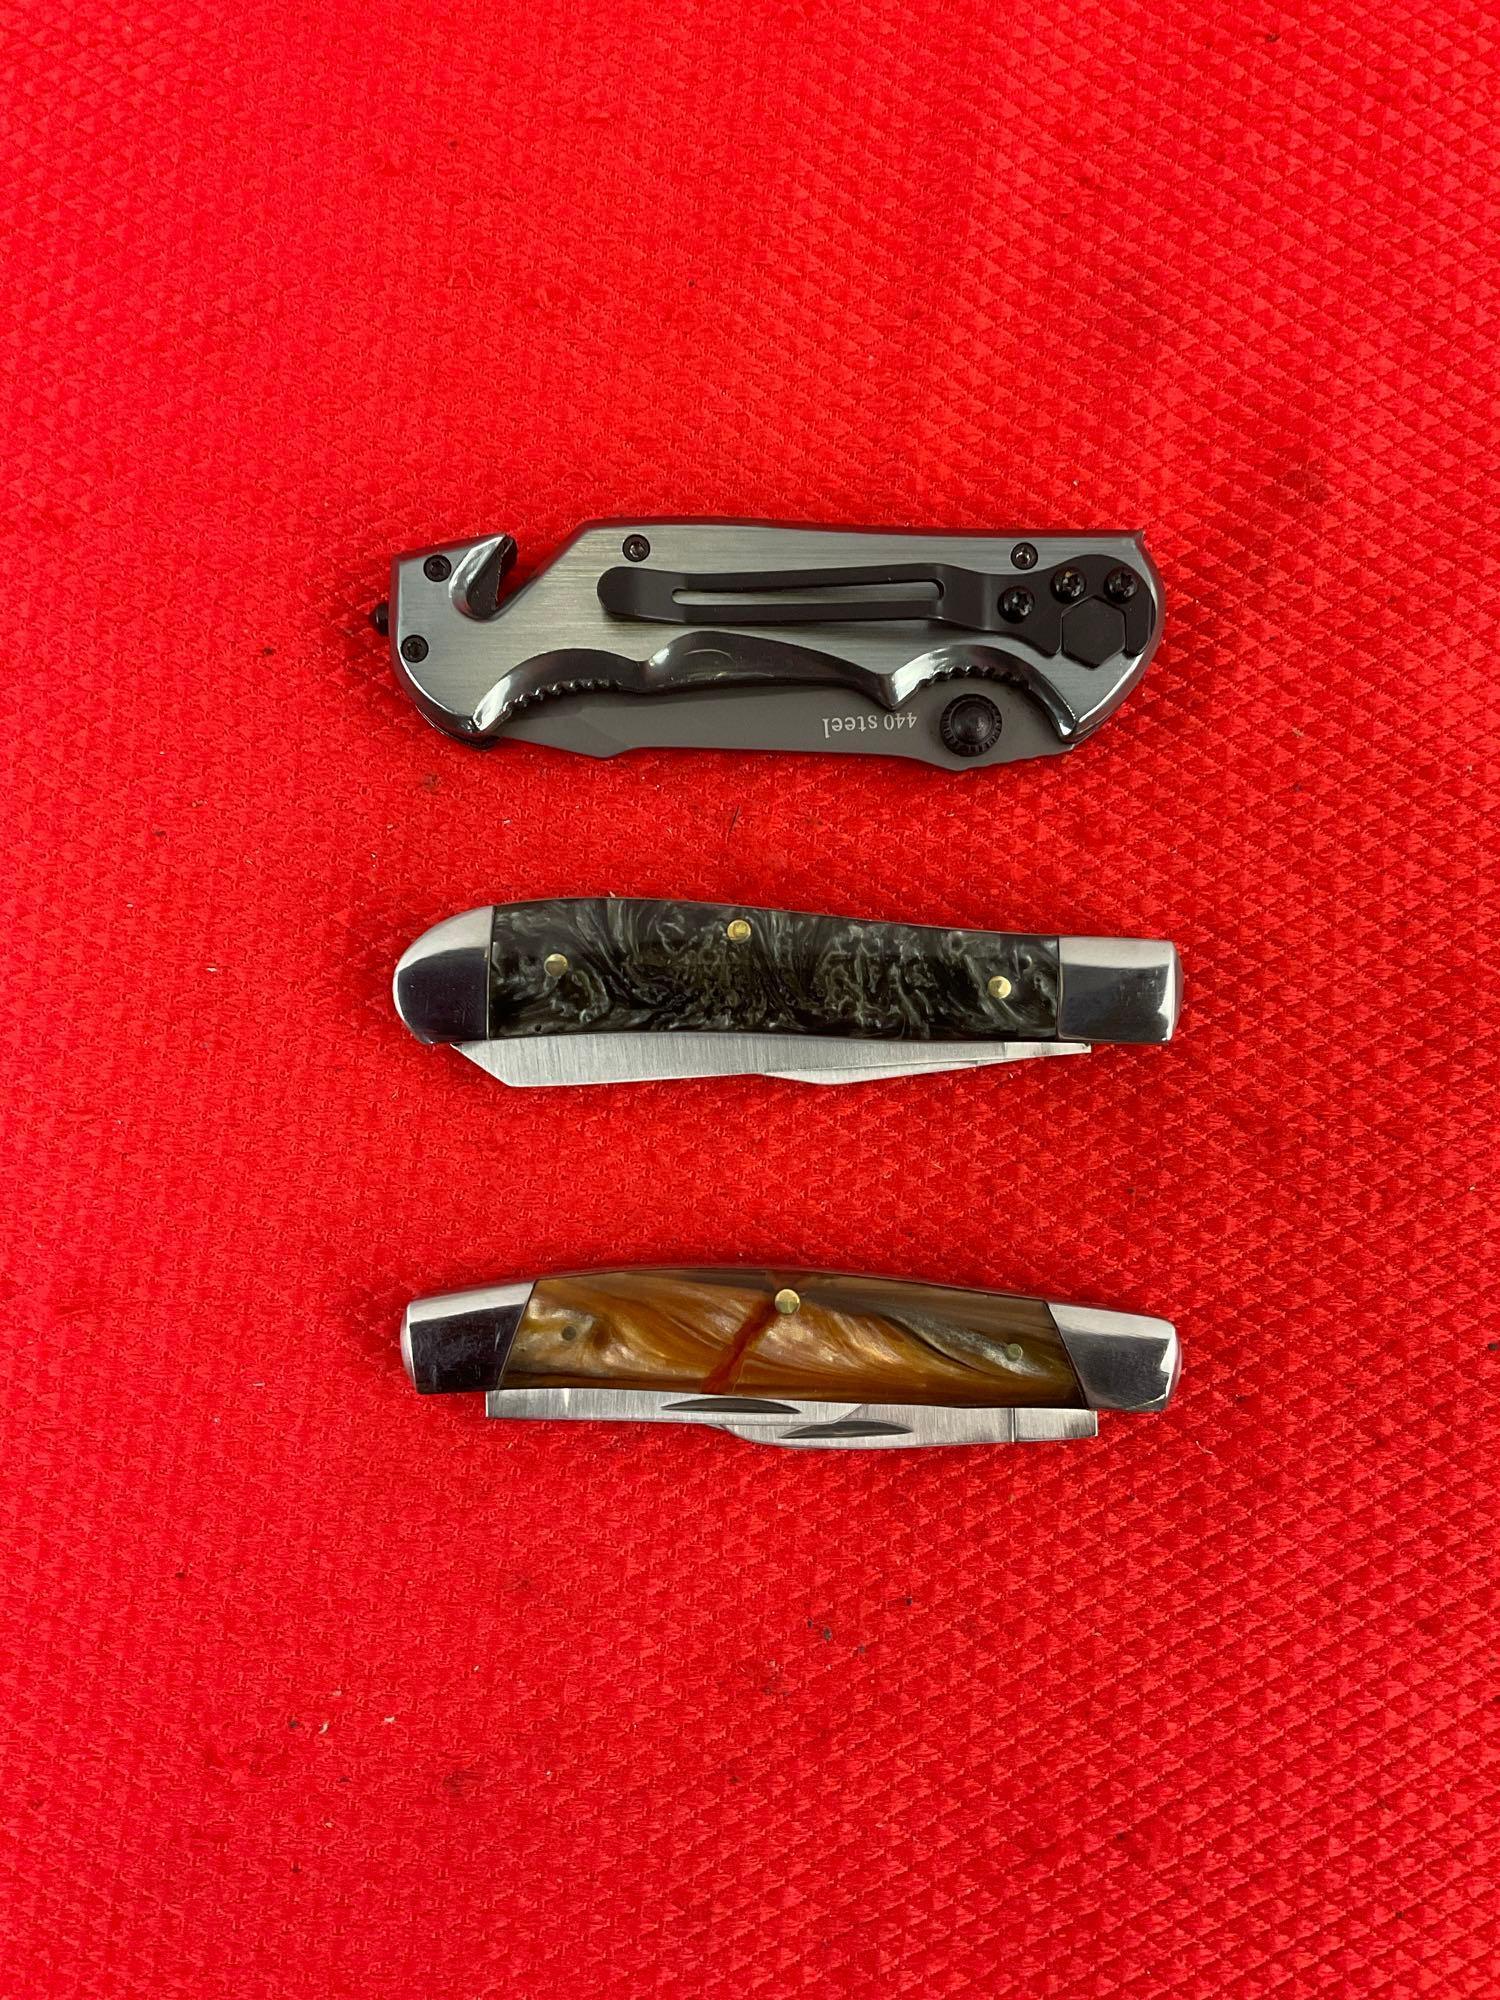 3 pcs Steel Folding Blade Pocket Knife Assortment. 2x Schrade Imperial, 1x SOG. NIB. See pics.